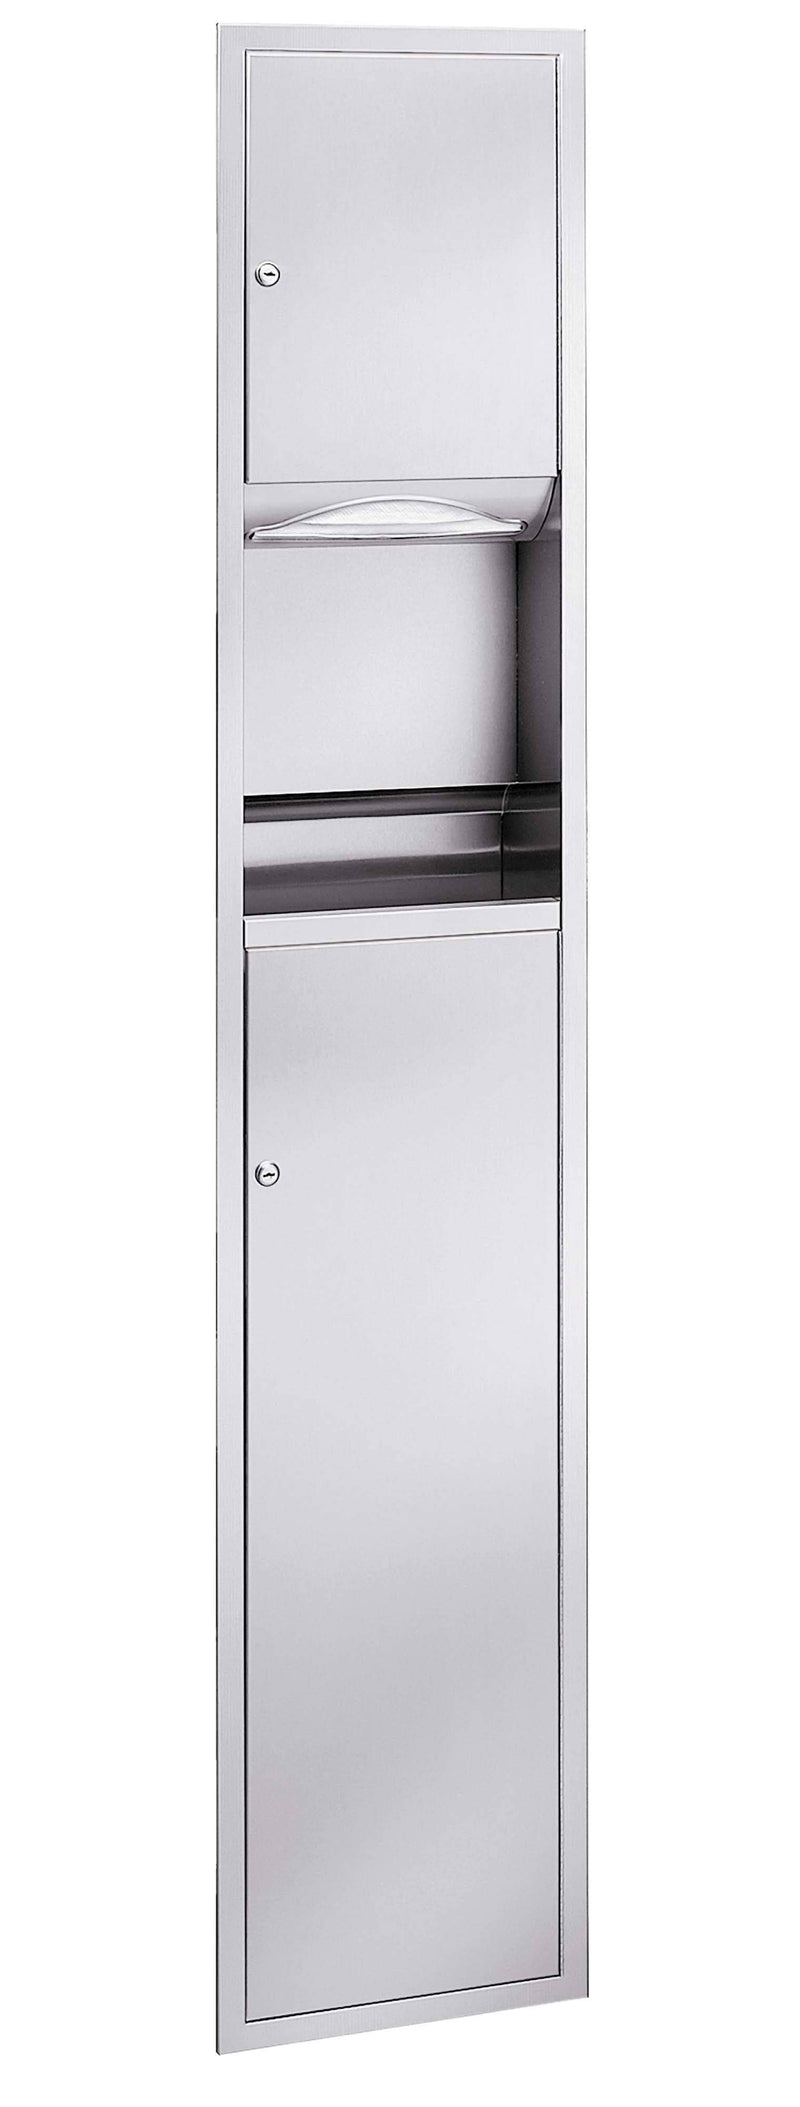 Bradley 225-10 Combination Toilet Paper Dispenser/Waste Receptacle, Semi-Recessed-Mounted, Stainless Steel - TotalRestroom.com